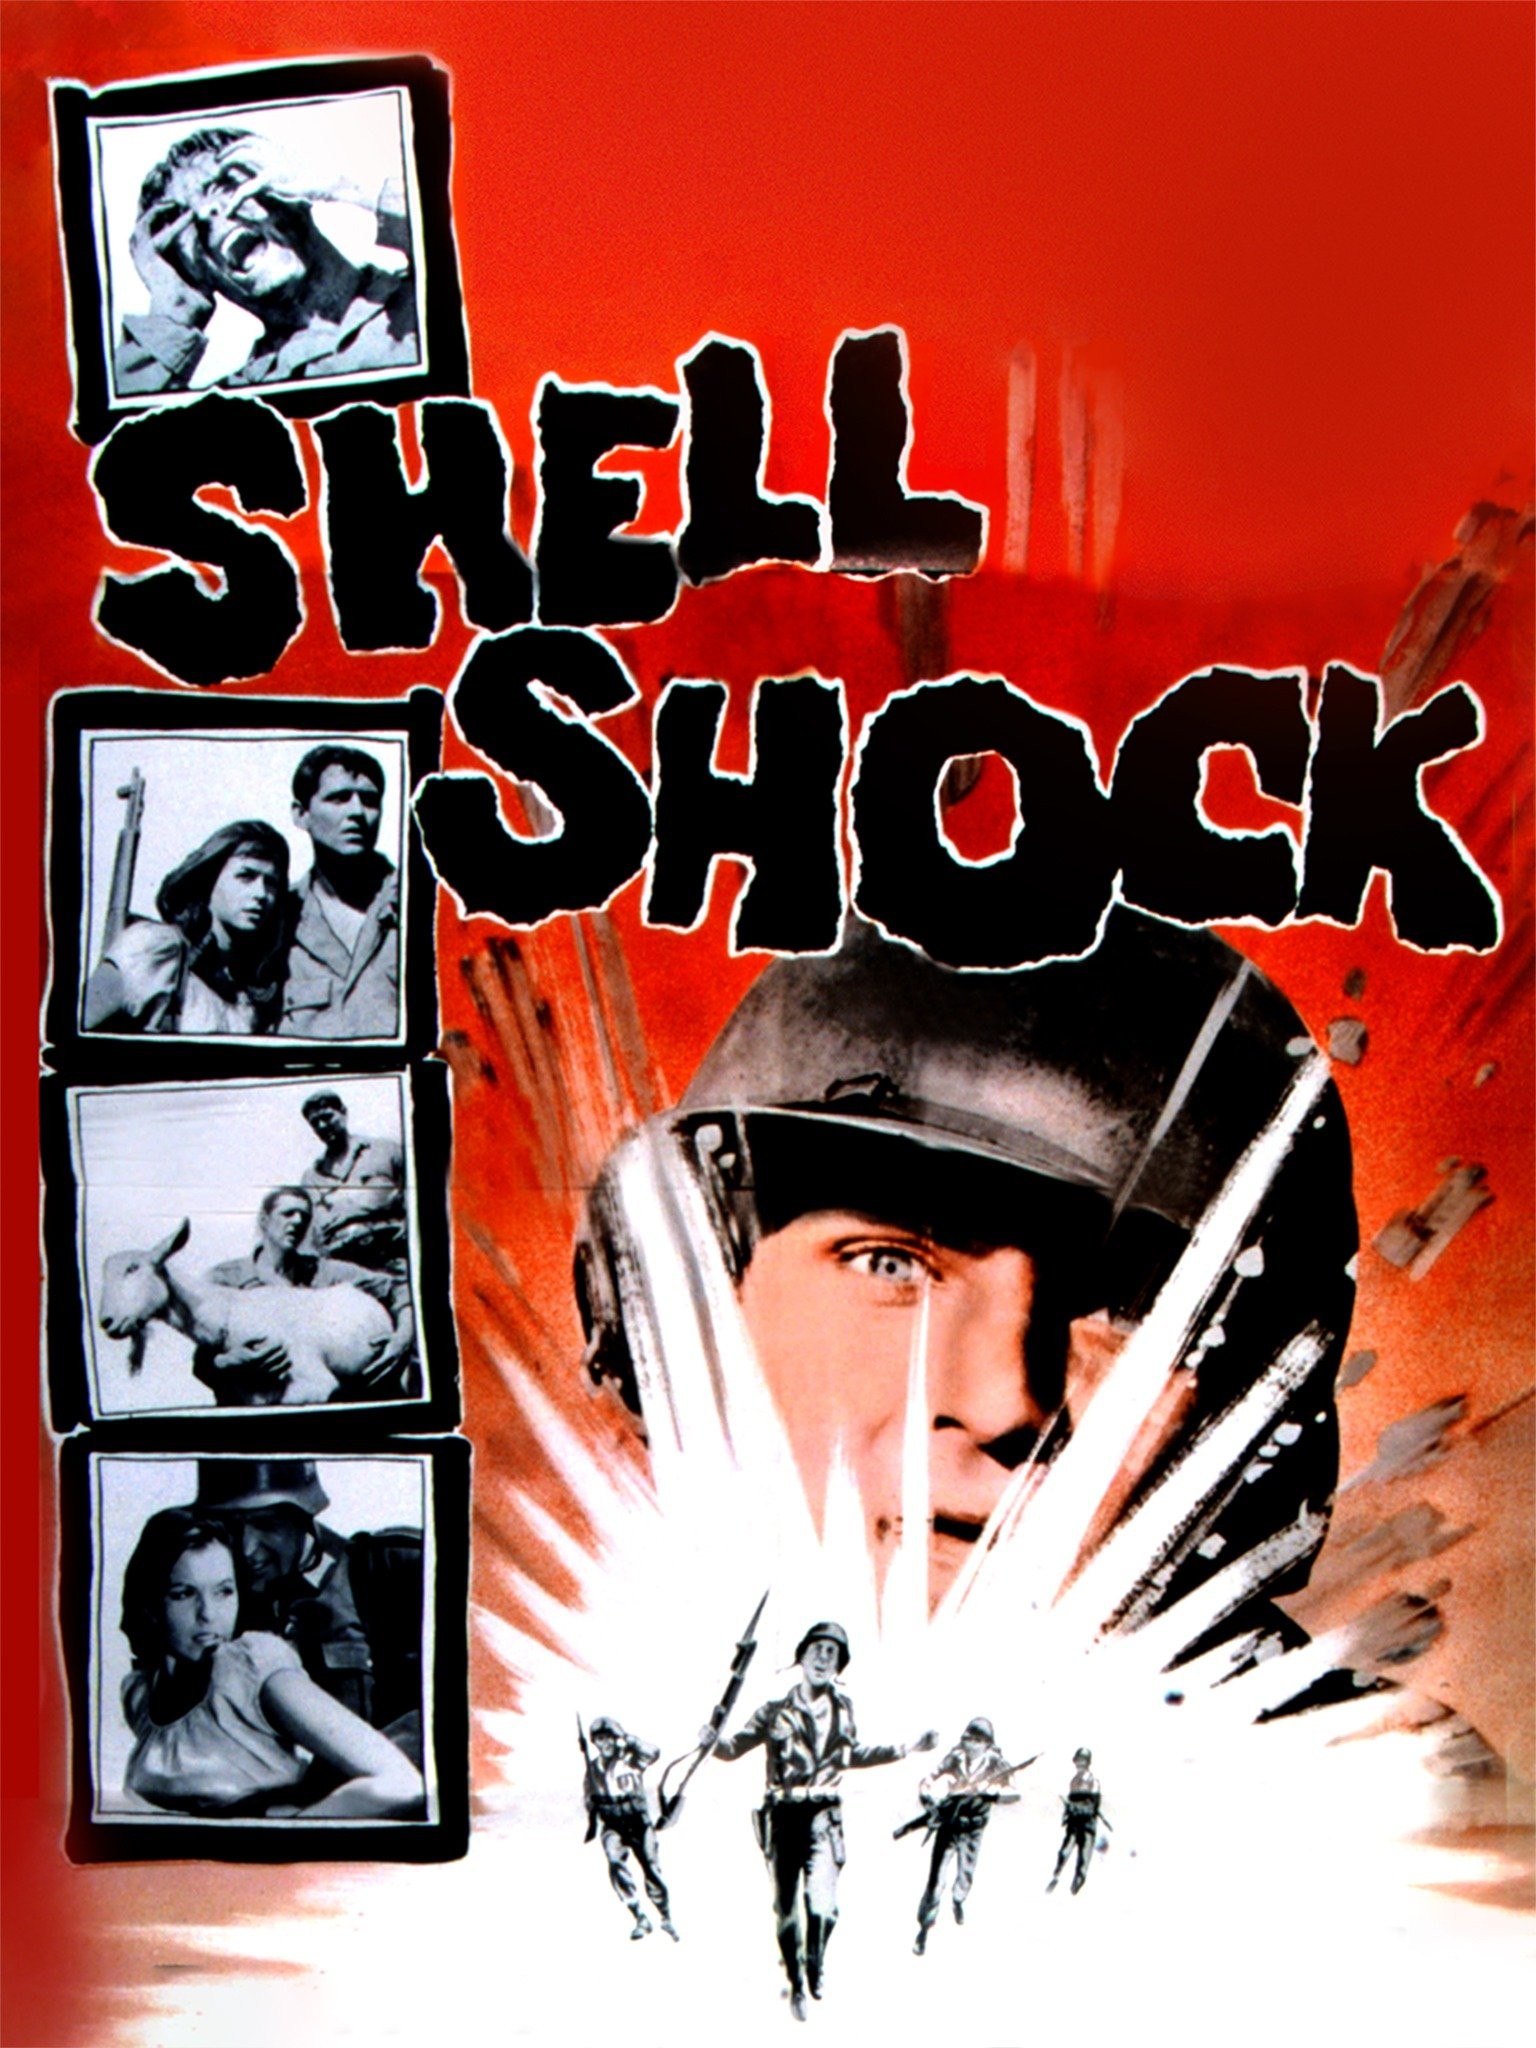 Shell Shock (film) - Wikipedia